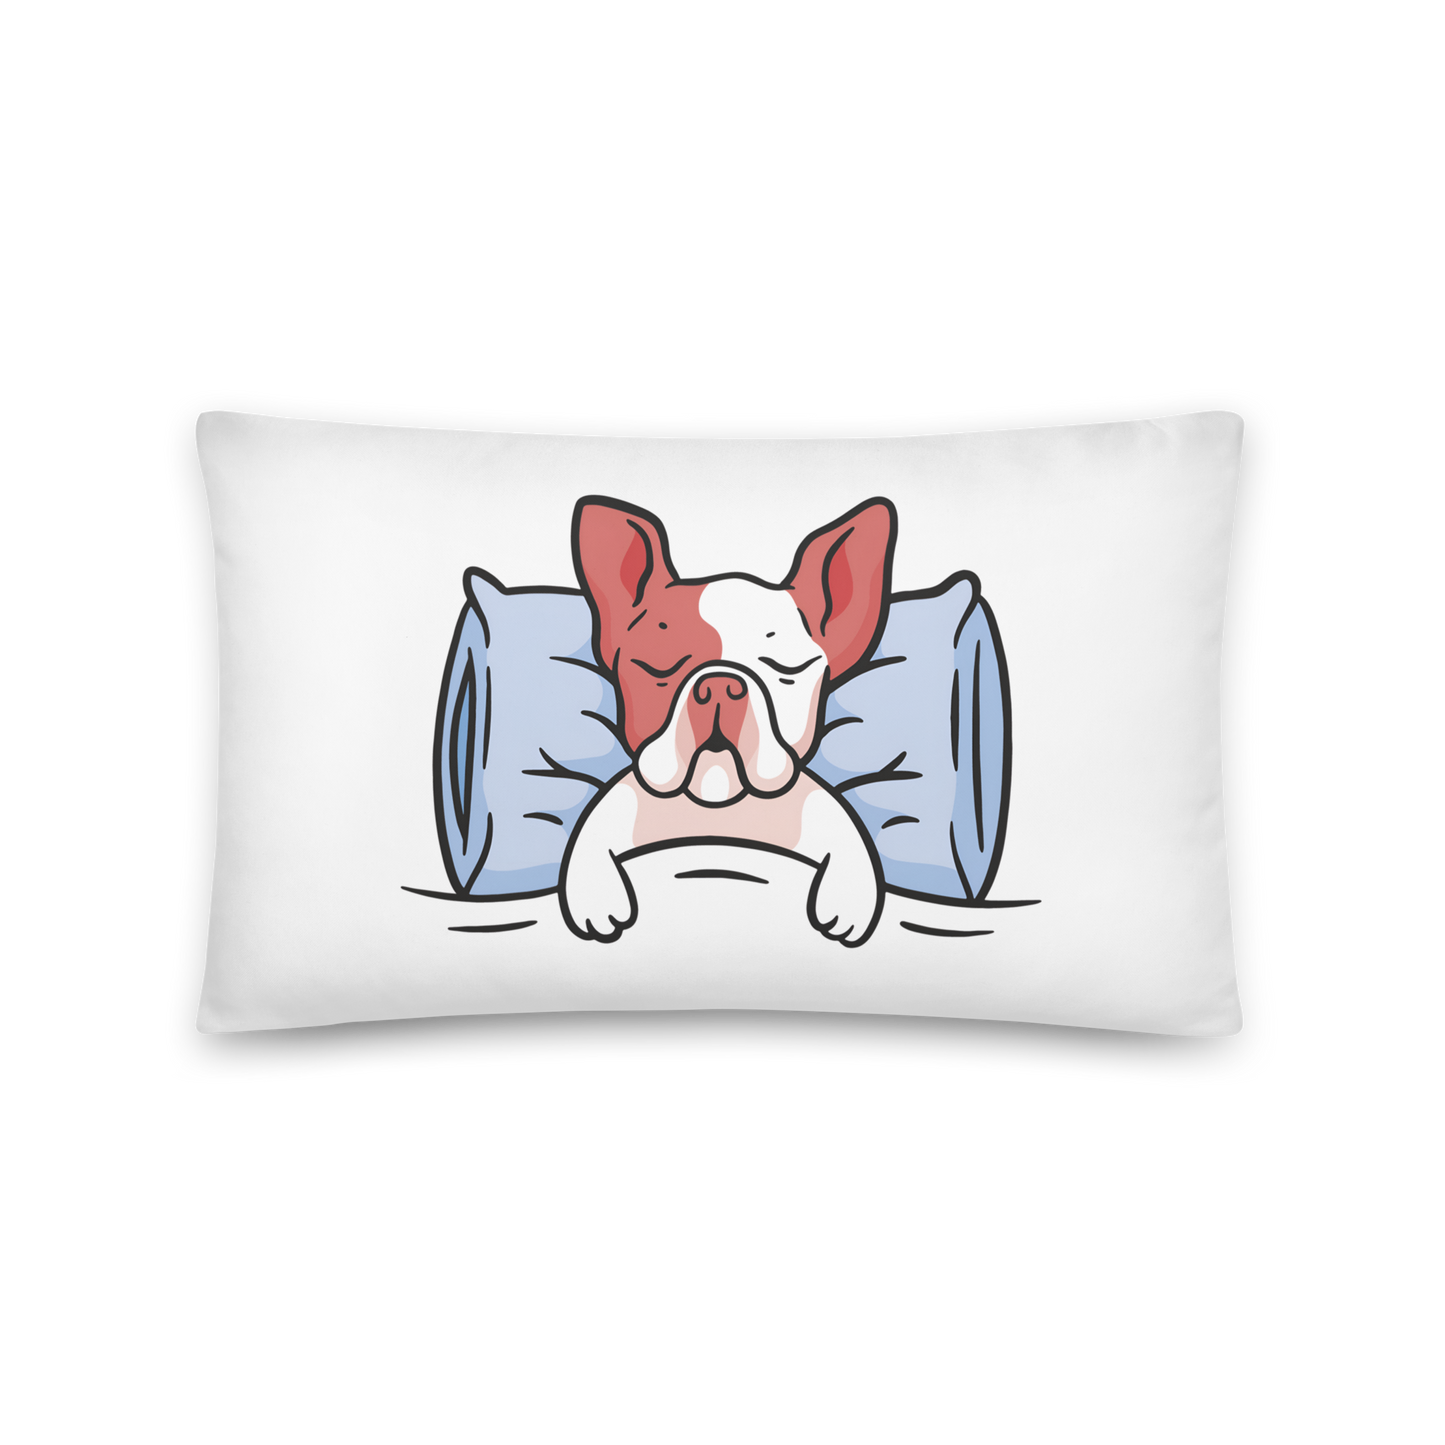 Bulldog sleeping on bed | Basic Pillow